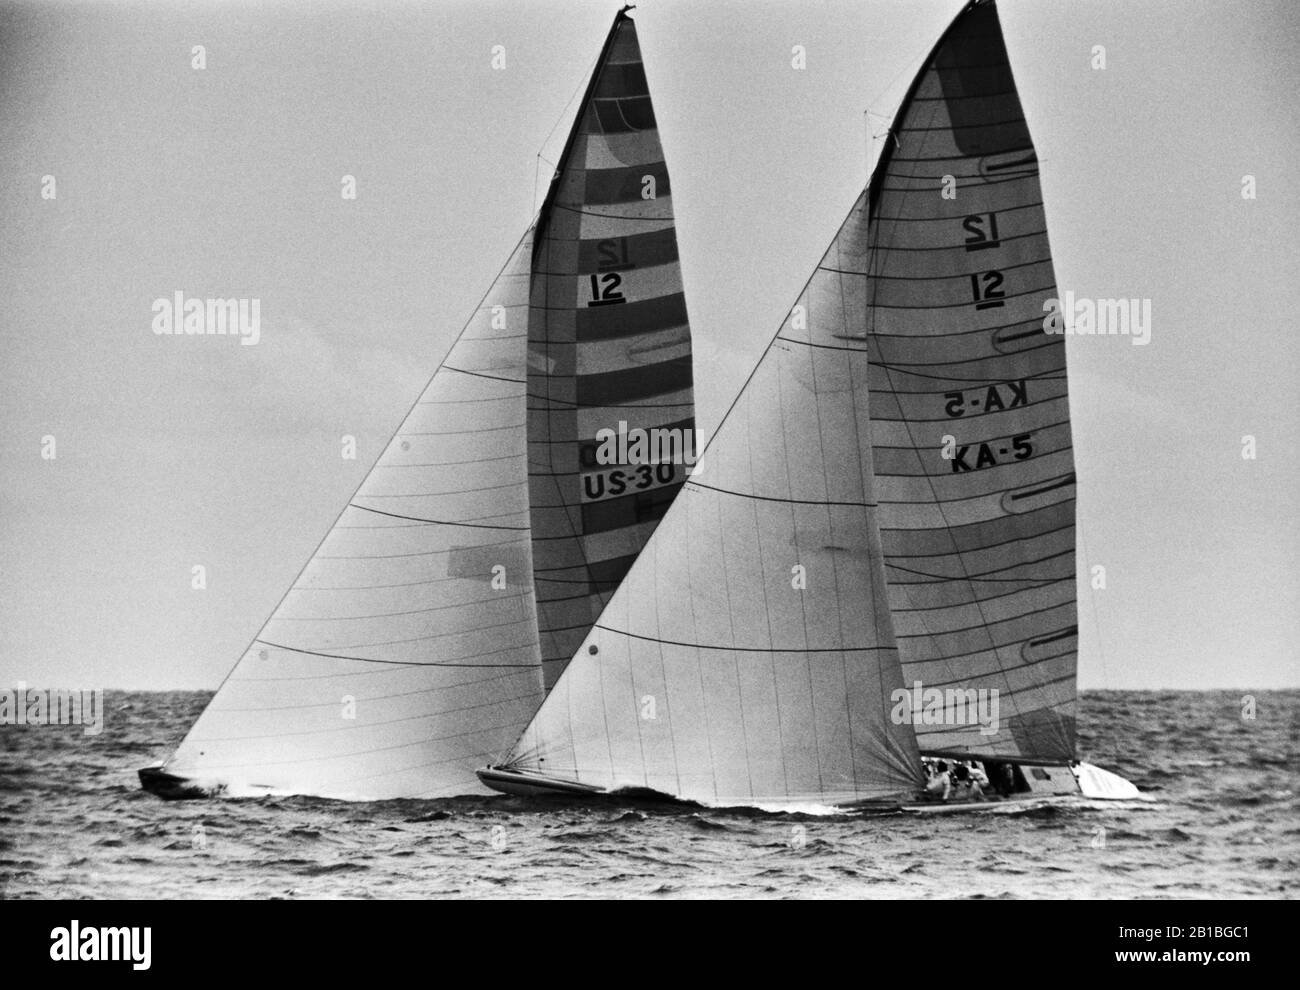 AJAXNETPHOTO. 26TH SEP 1980. NEWPORT, RHODE ISLAND, USA. - AMERICA'S CUP - FREEDOM (US-30) SKIPPERED BY DENNIS CONNER LEADS AUSTRALIA (KA-5)  AT THE START.  PHOTO:JONATHAN EASTLAND/AJAX REF:80926 9A Stock Photo